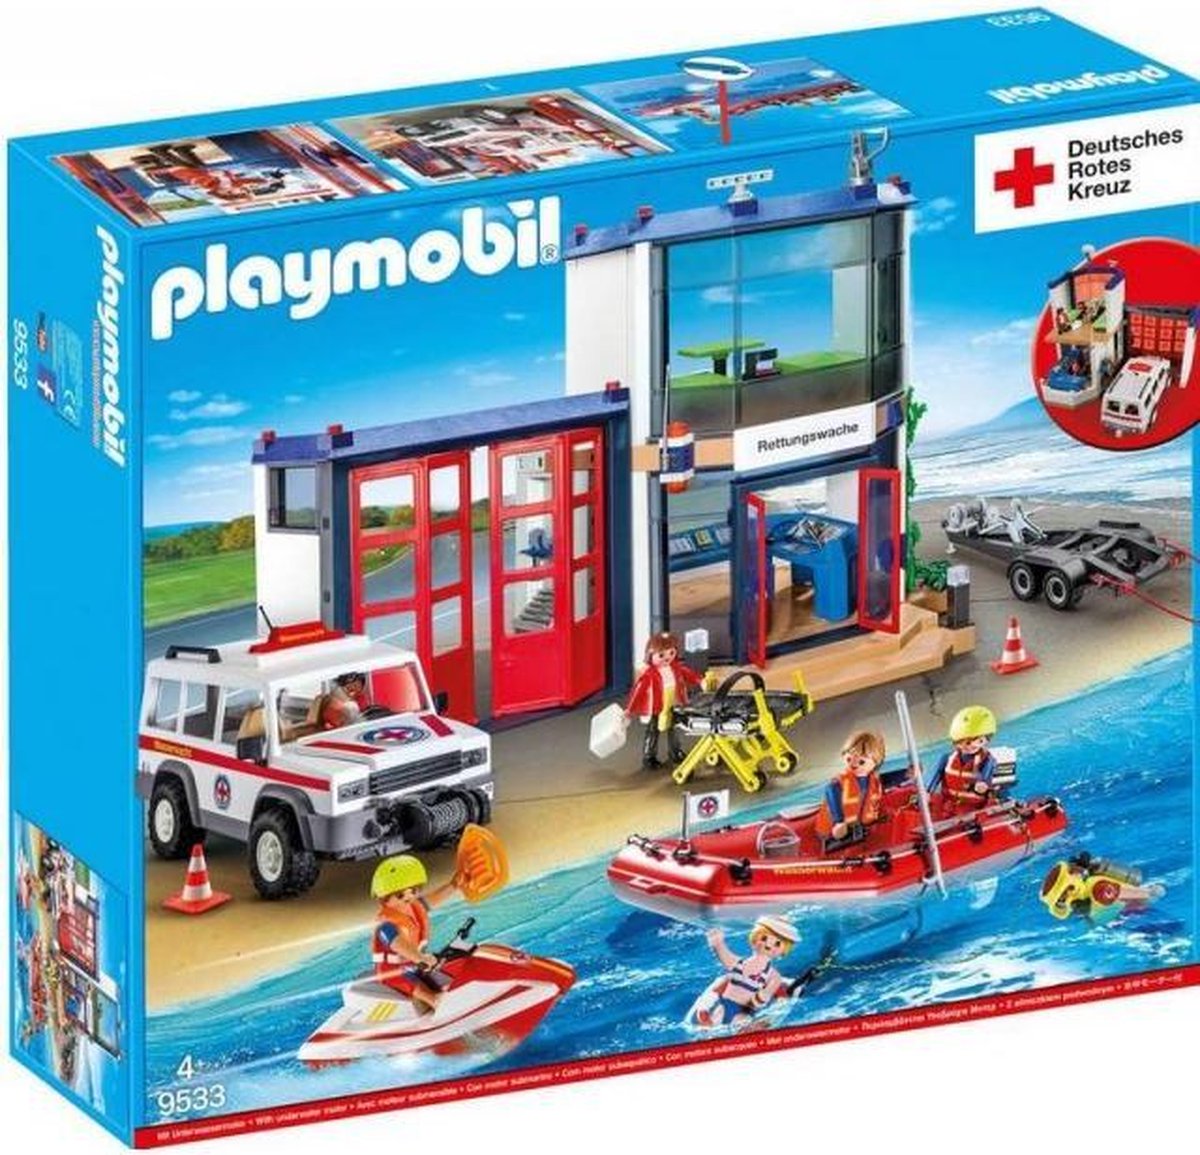 Playmobil 9533 - Rode Kruis mega set